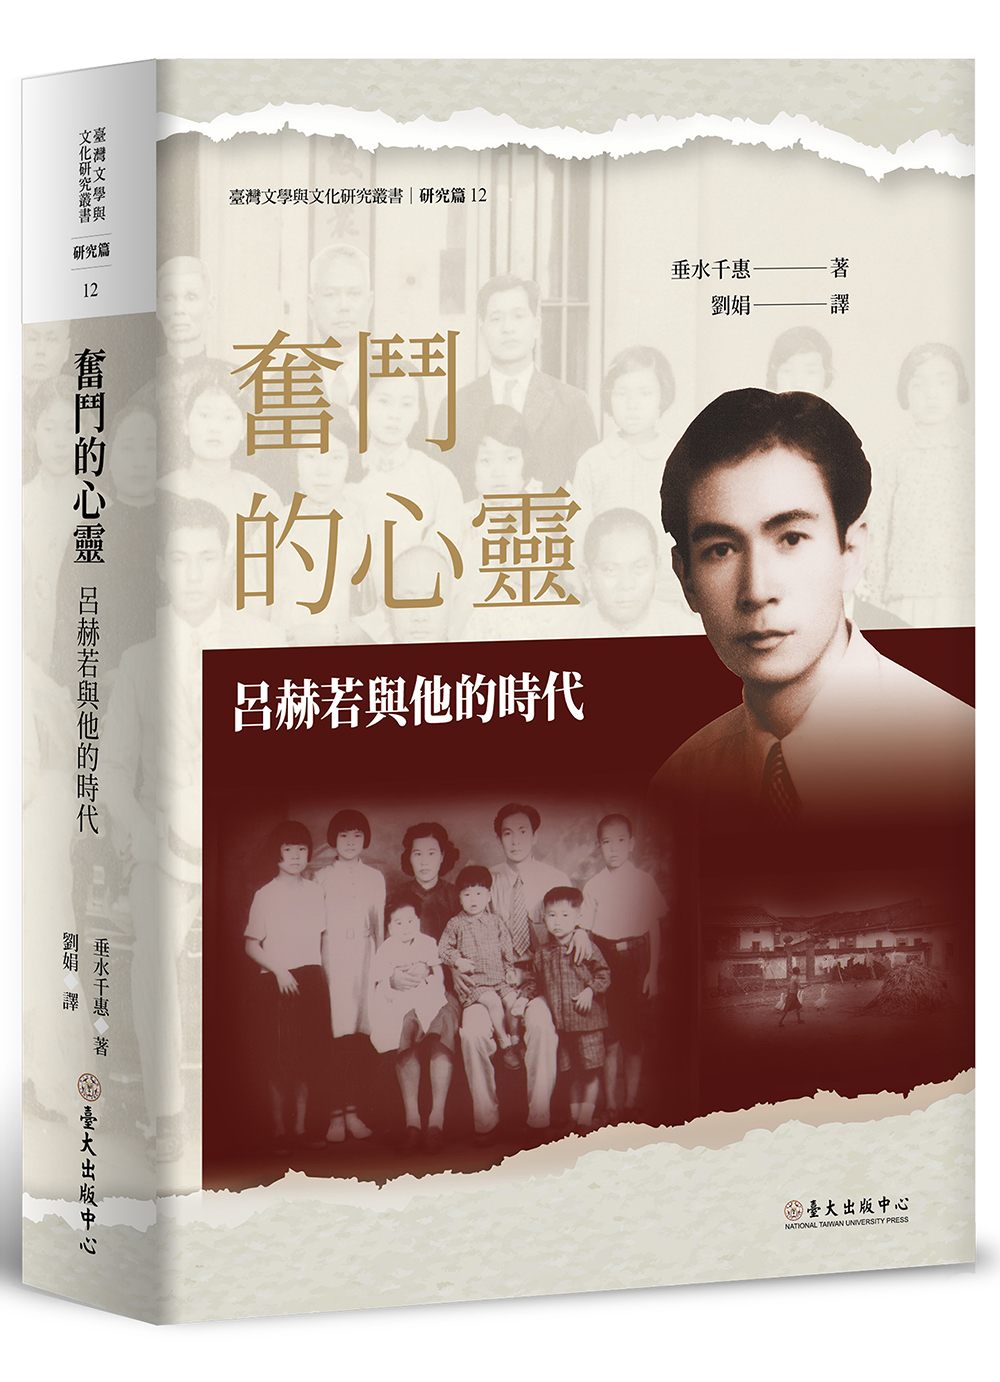 The Spirit of Struggle: Liu He-ruo and His Times